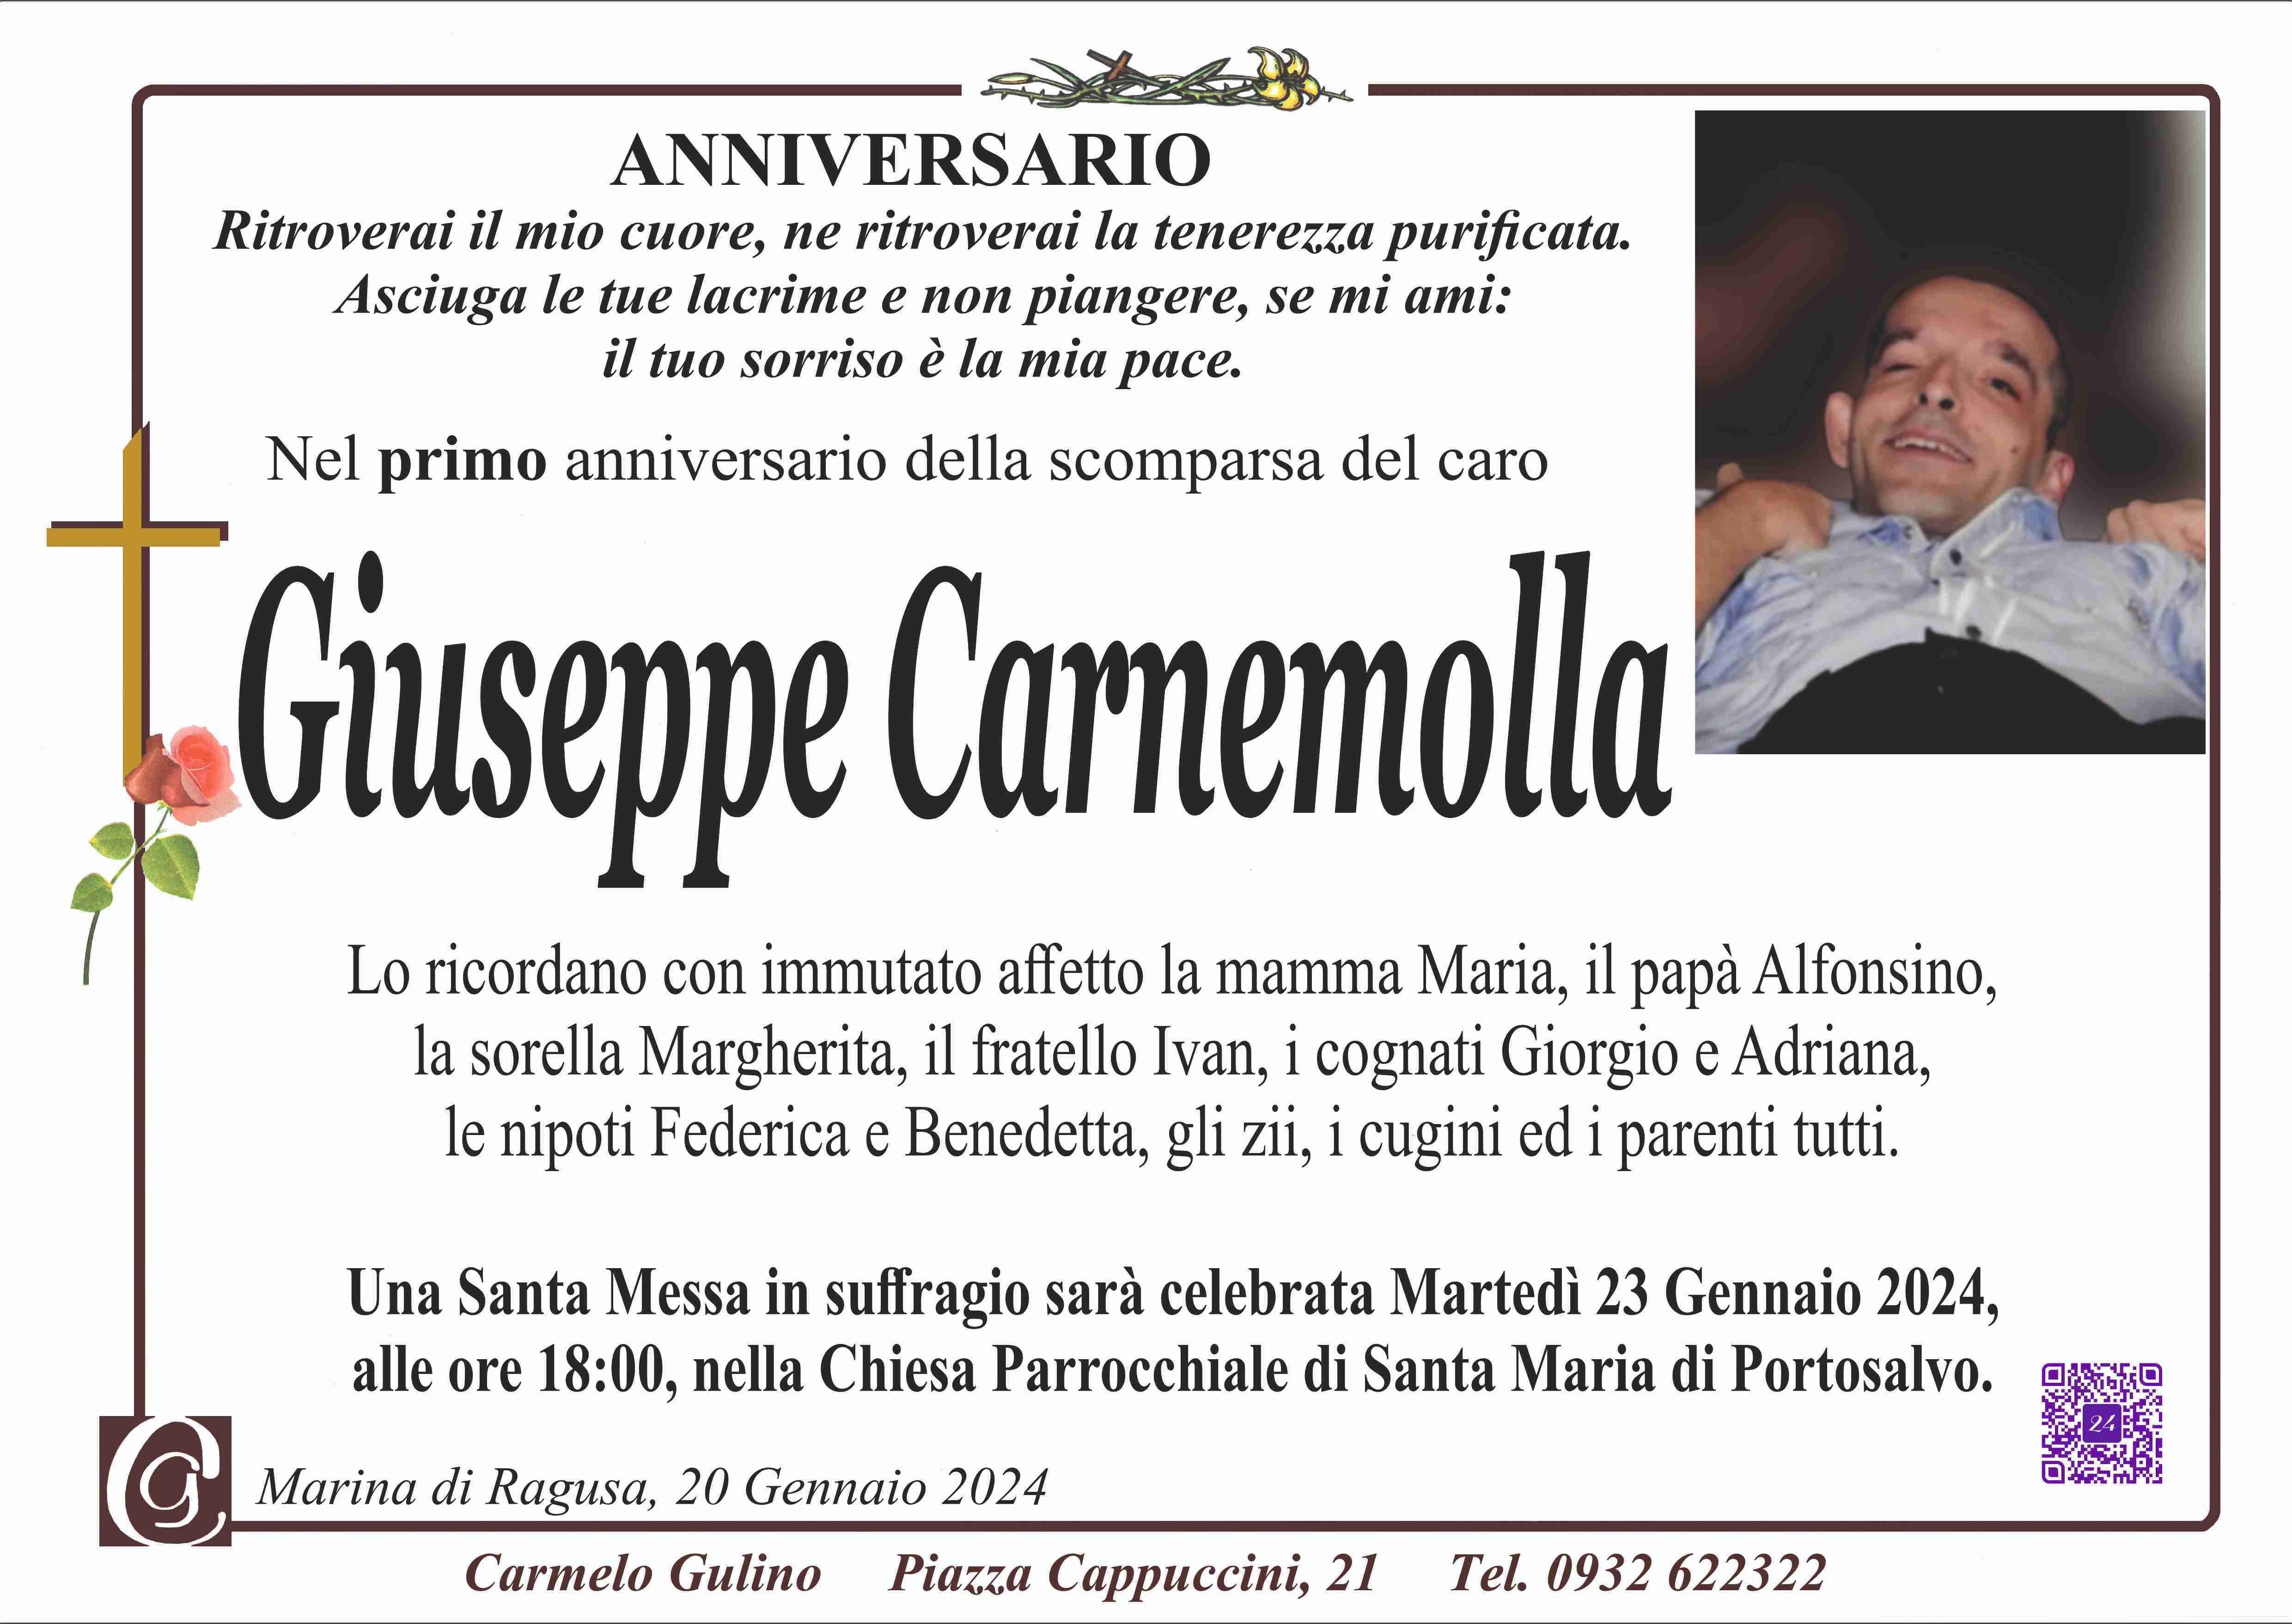 Giuseppe Carnemolla